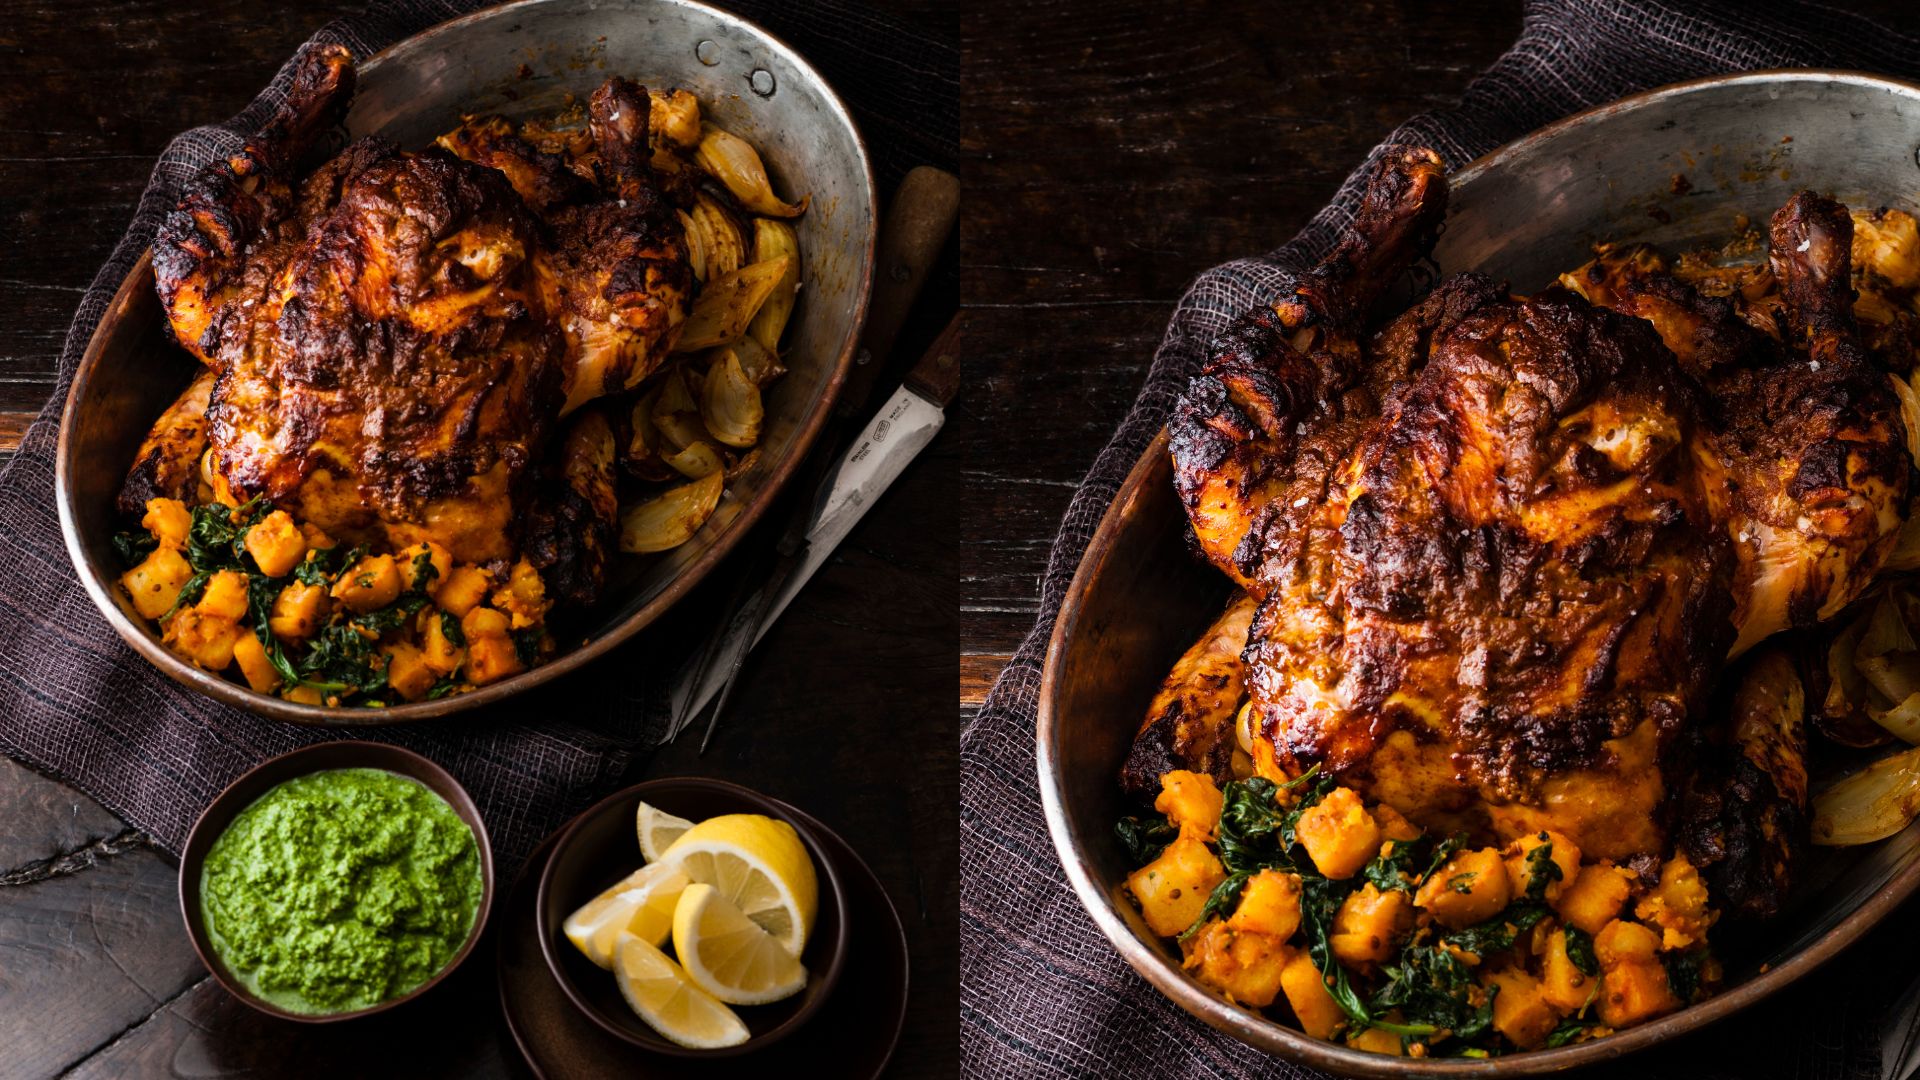 Tikka roast chicken, one of woman&home's sunday lunch ideas